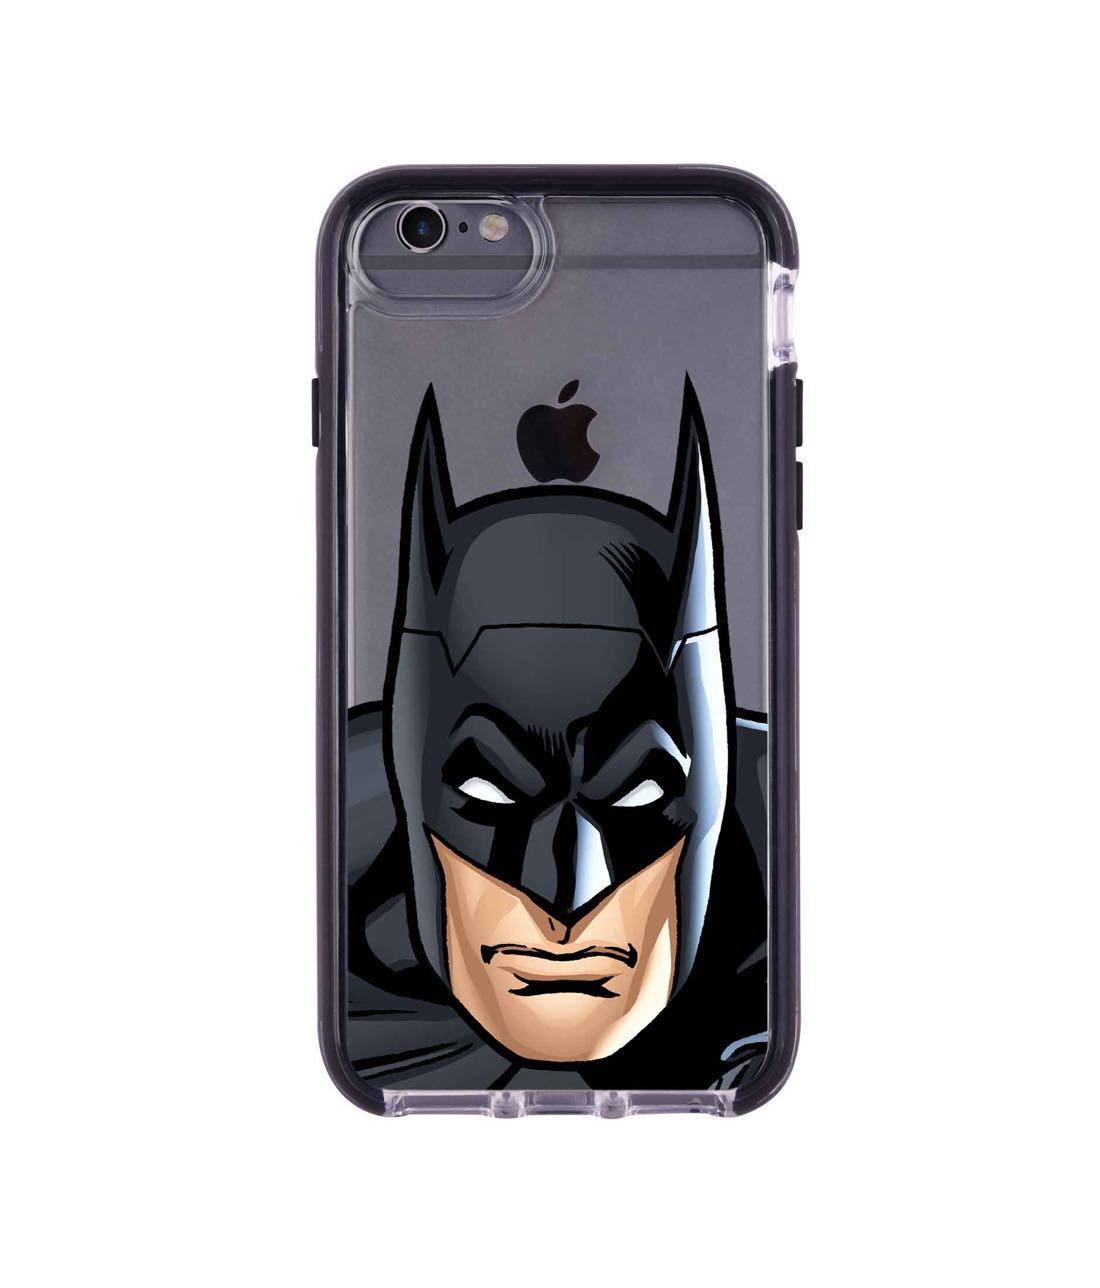 Fierce Batman - Extreme Phone Case for iPhone 6 Plus